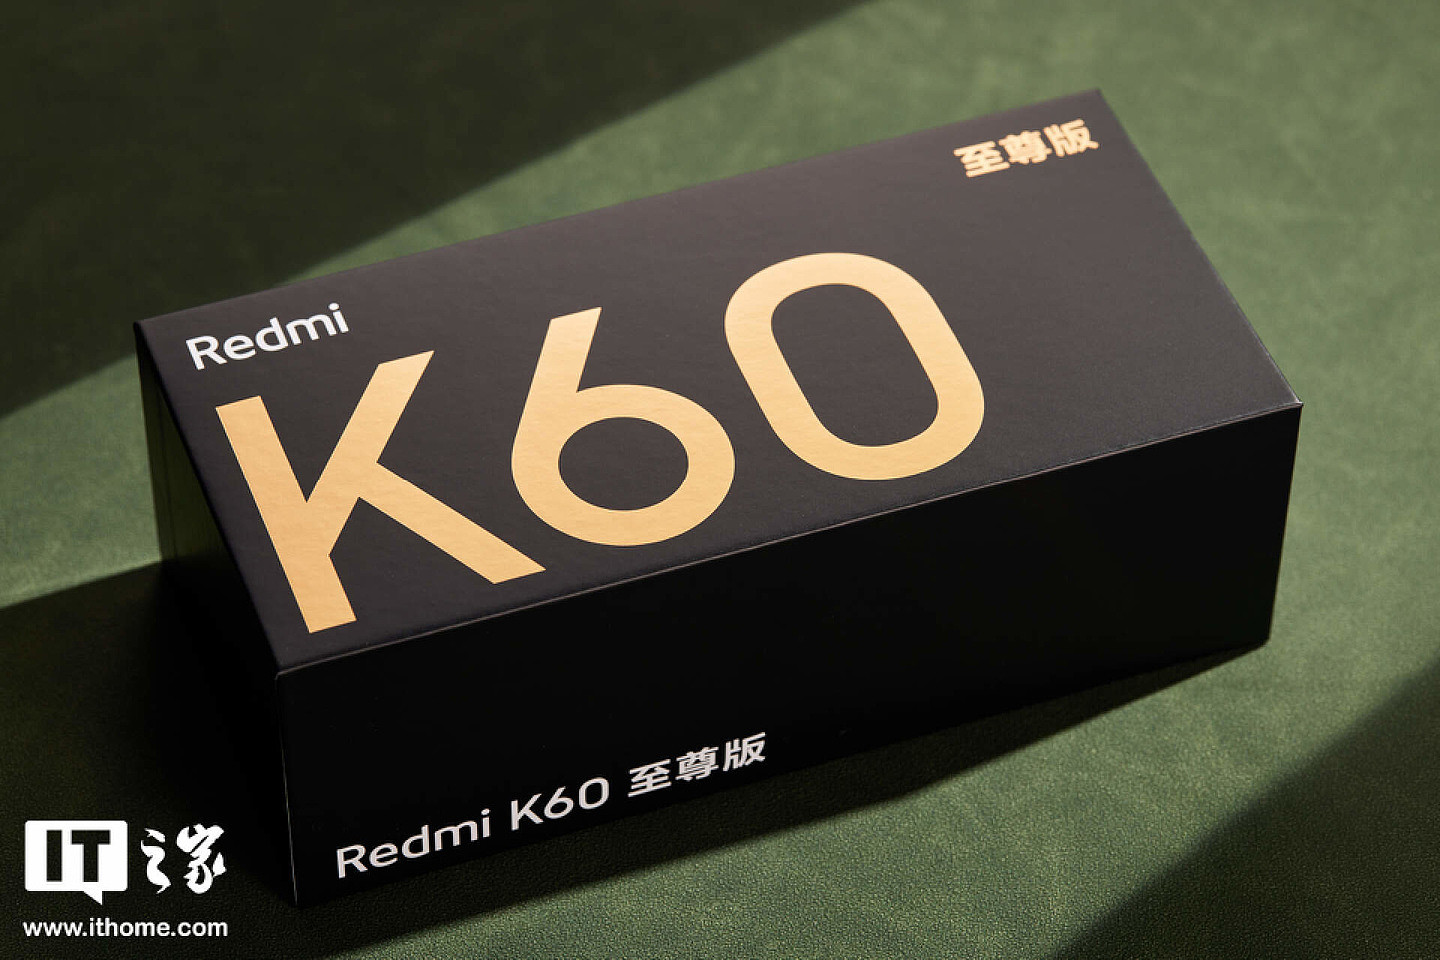 【IT之家评测室】Redmi K60 至尊版：2599 元起，这个价格真挑不出毛病 - 1